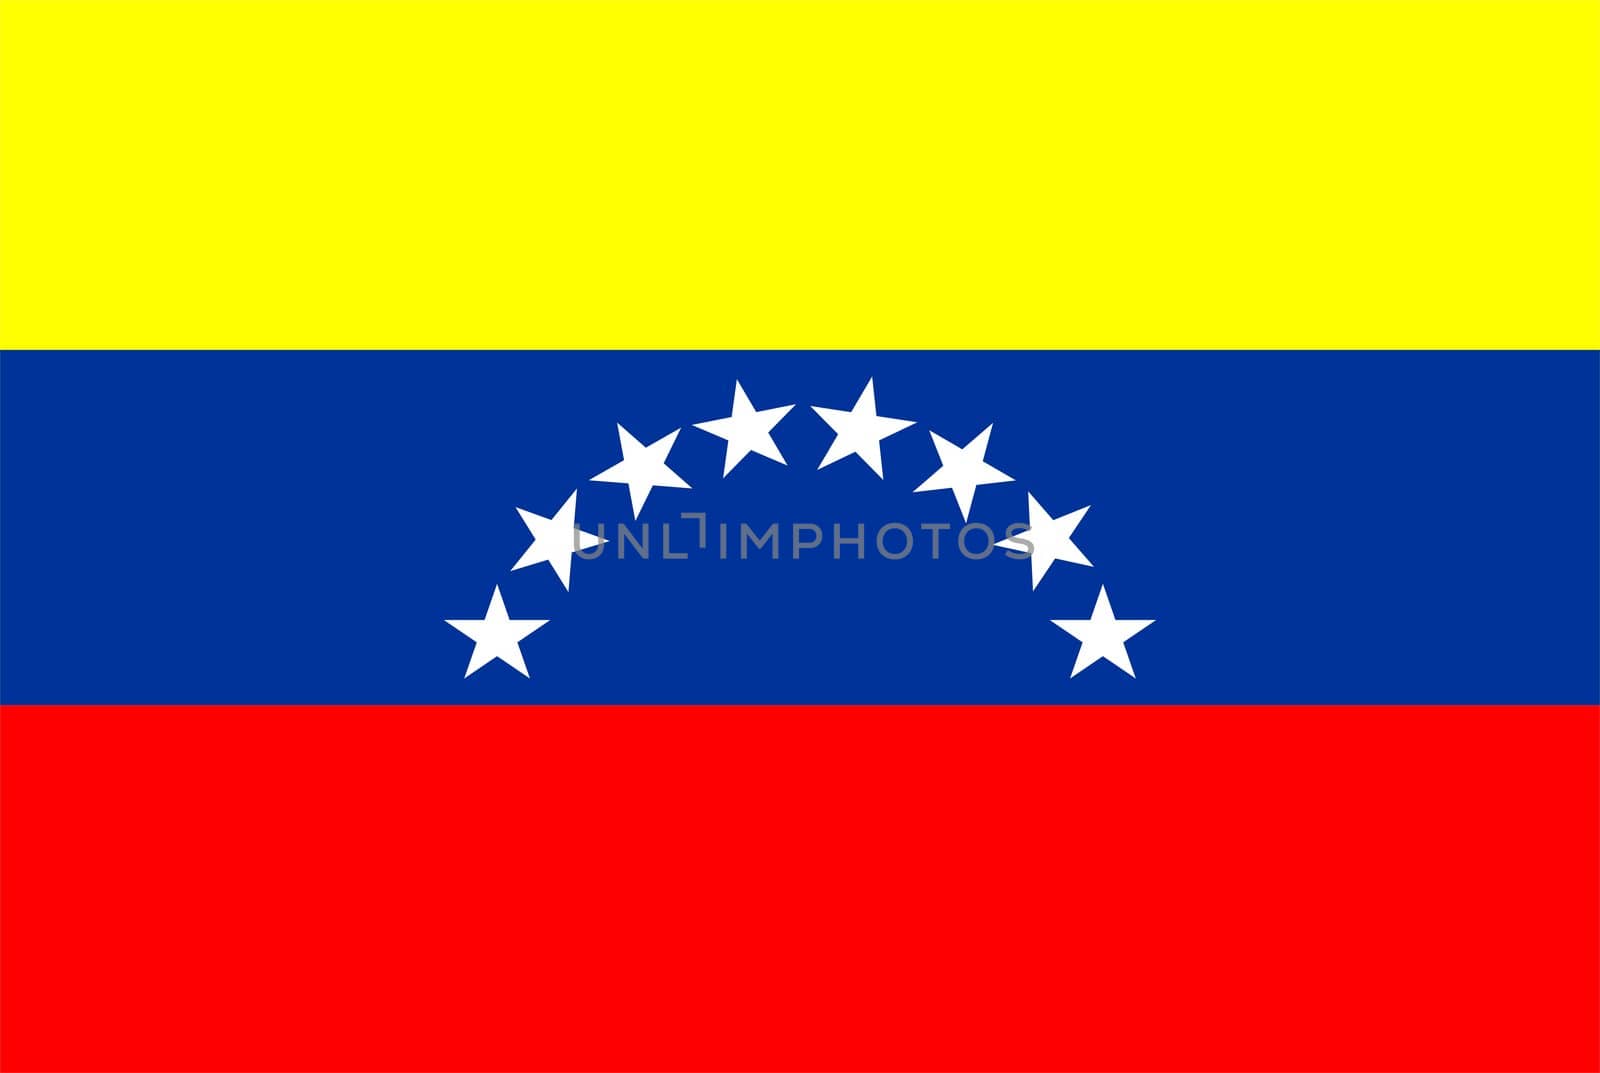 2D illustration of the flag of Venezuela